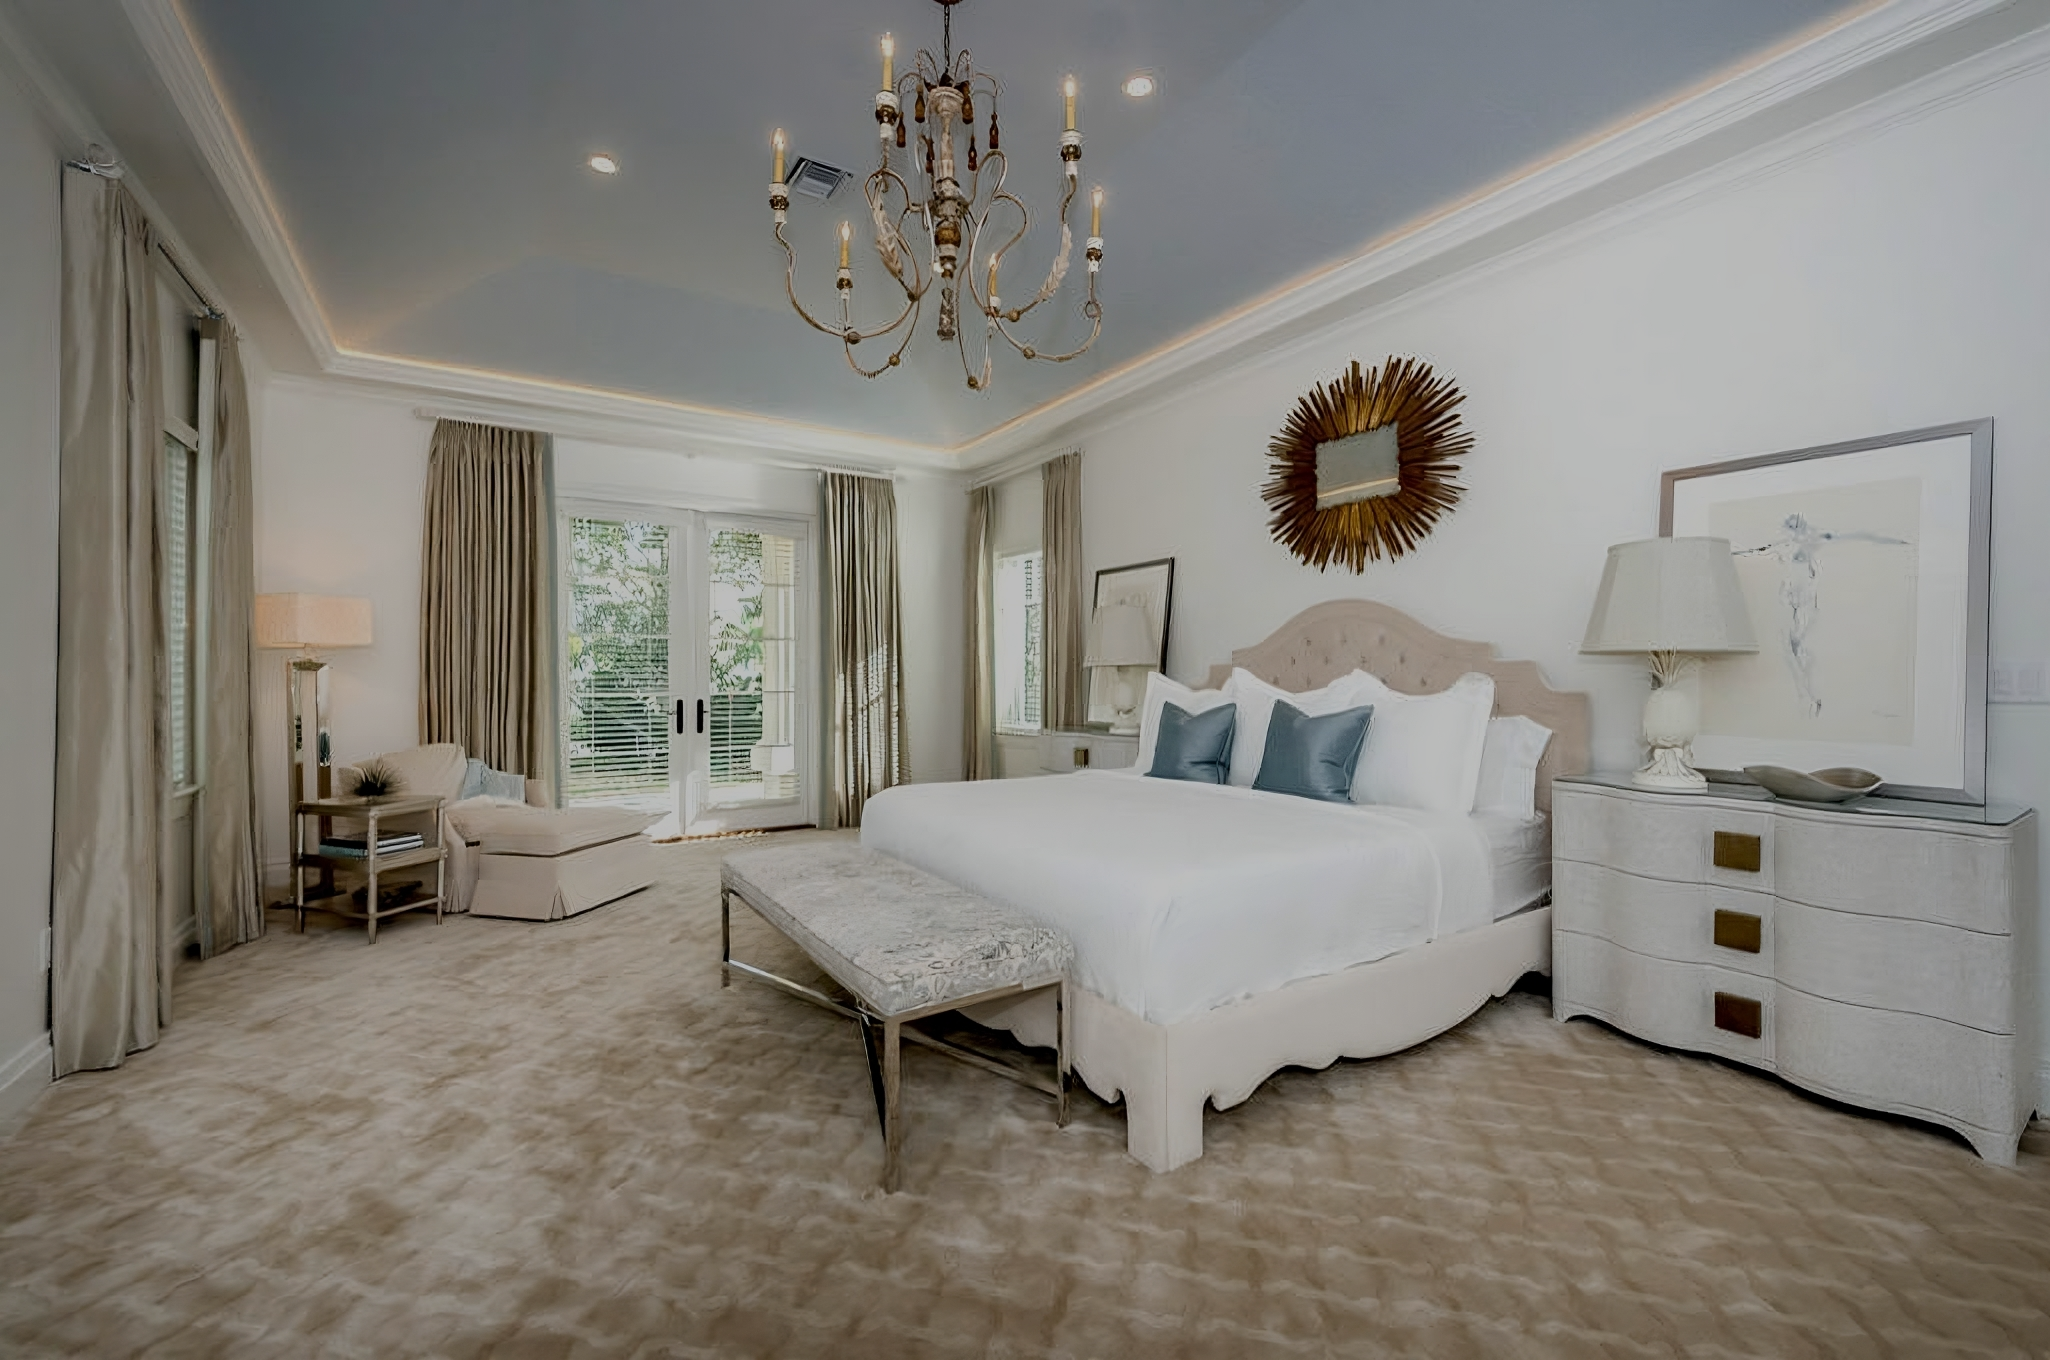 Strobel Design Build Recognized as Best Home Remodelers in Florida